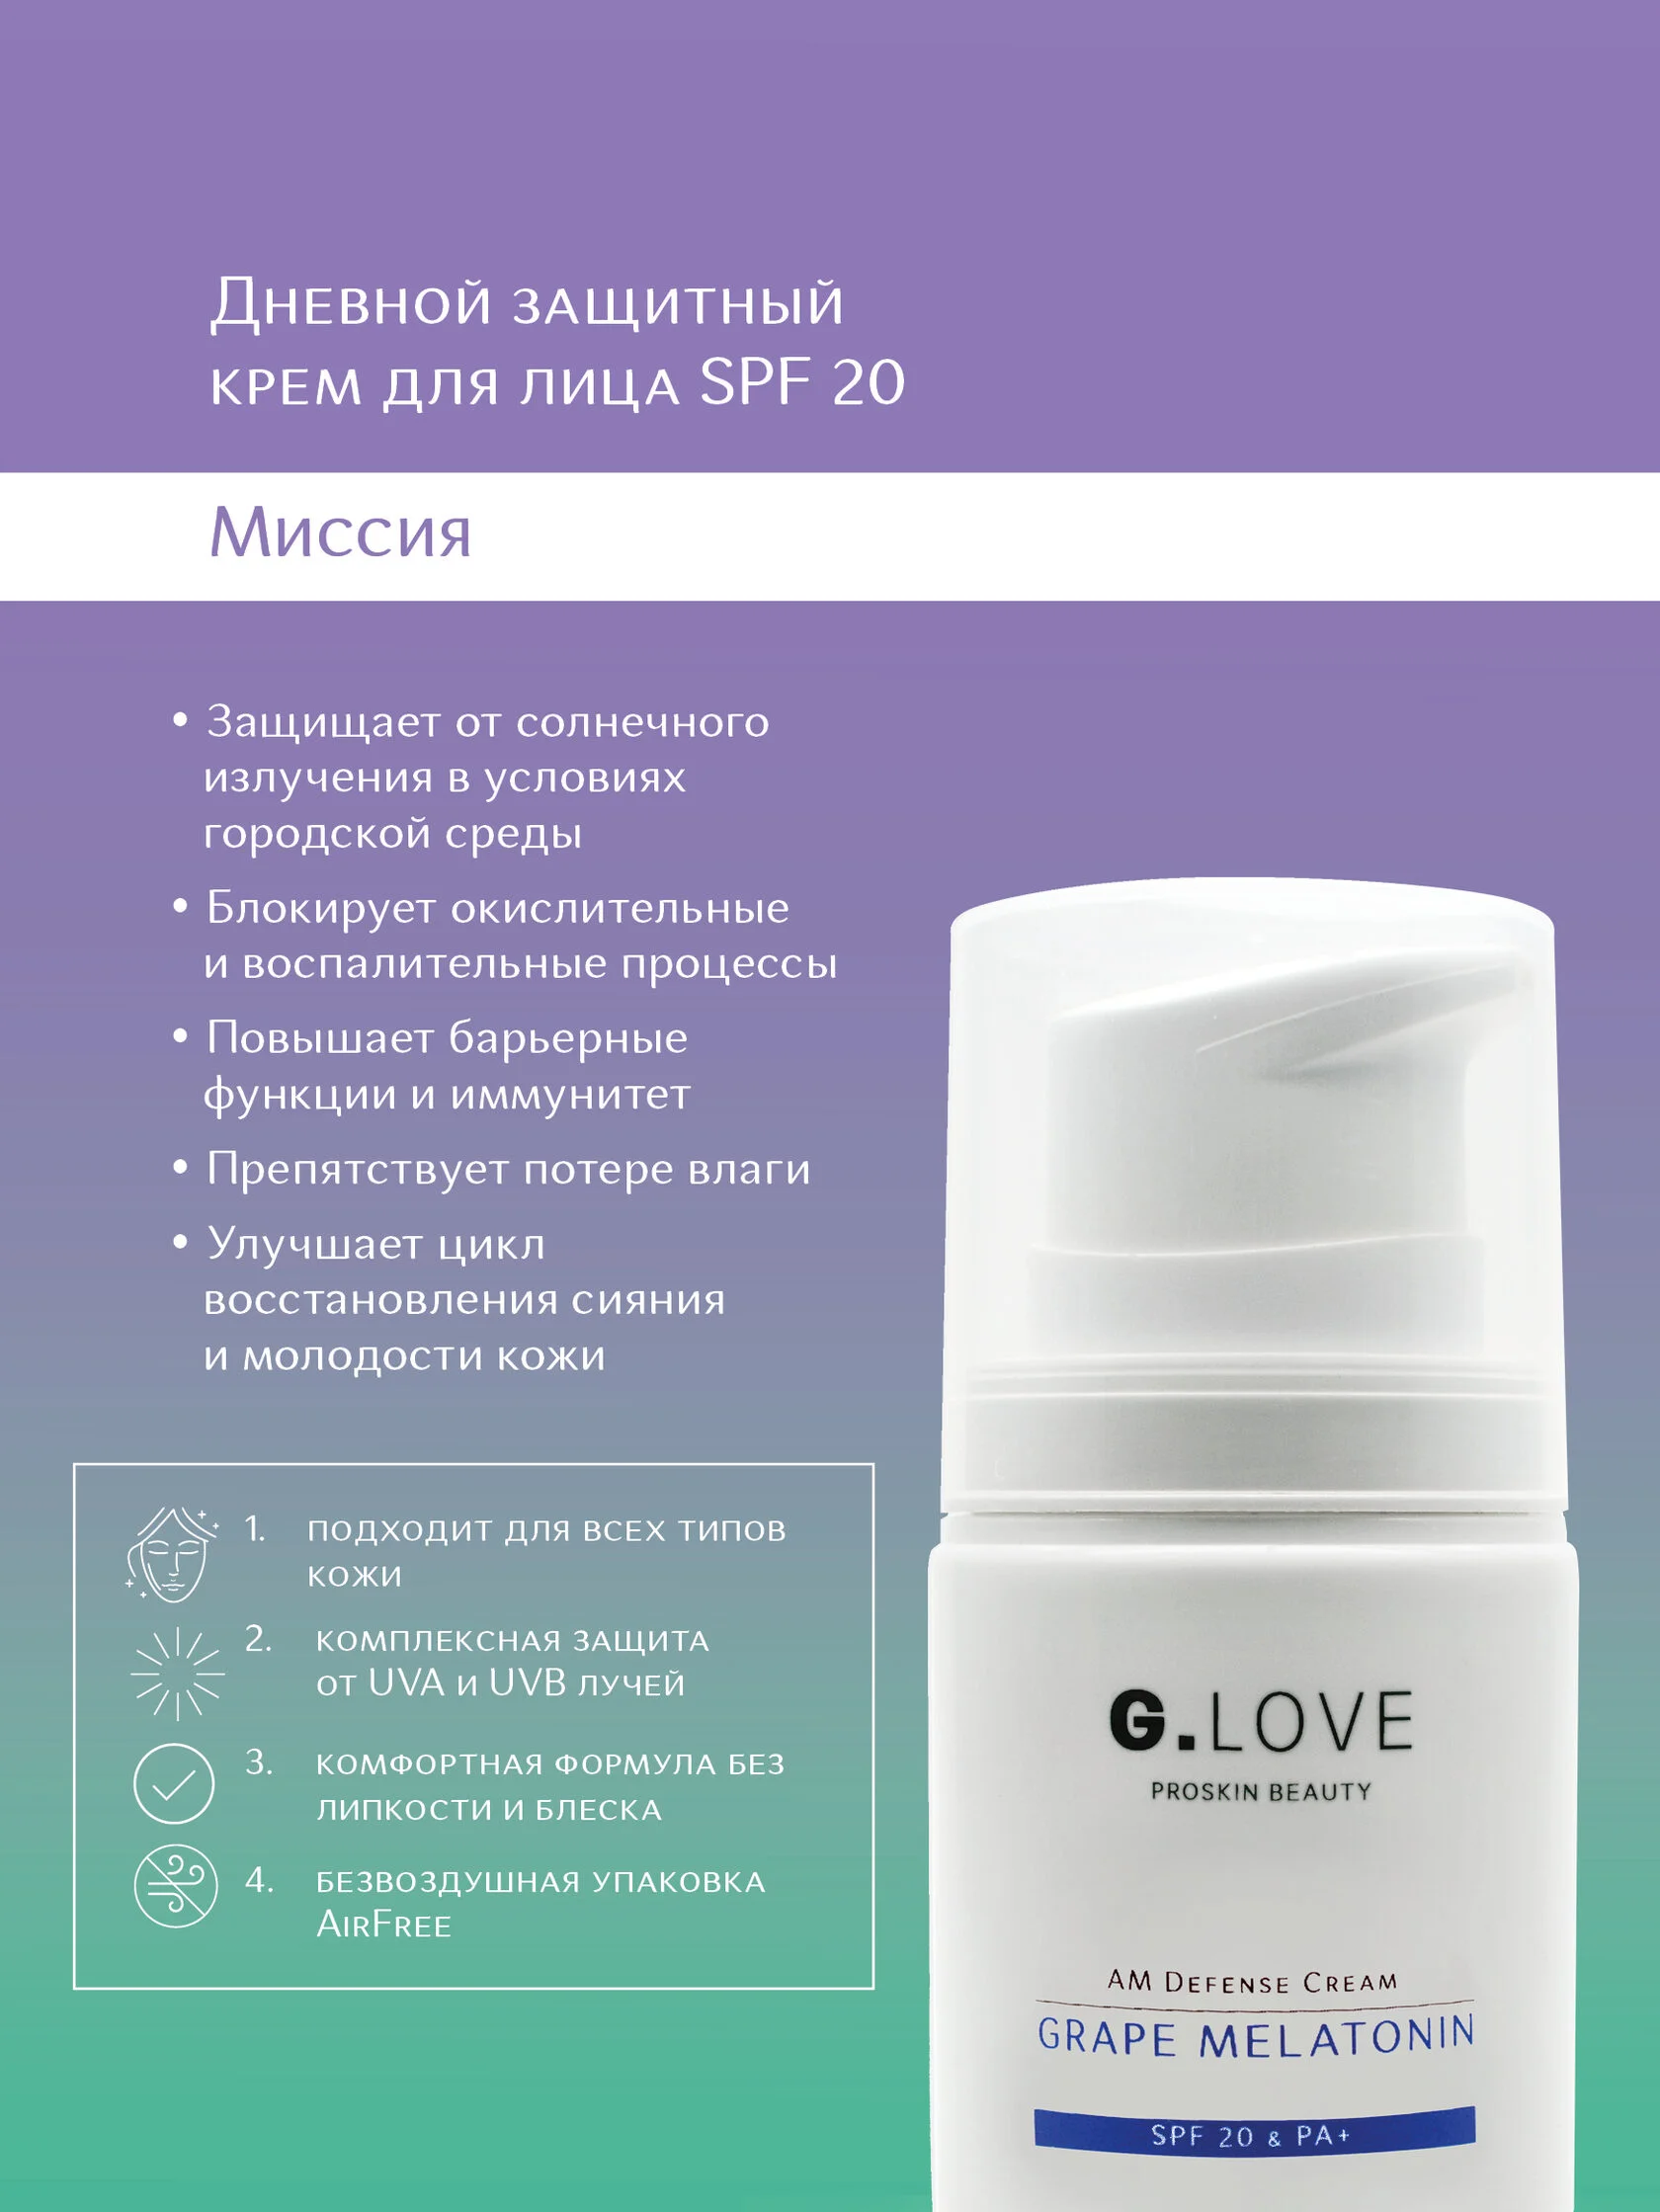 G.Love AM Defense Cream Grape Melatonin SPF20 PA+ 68330860 - фото 7